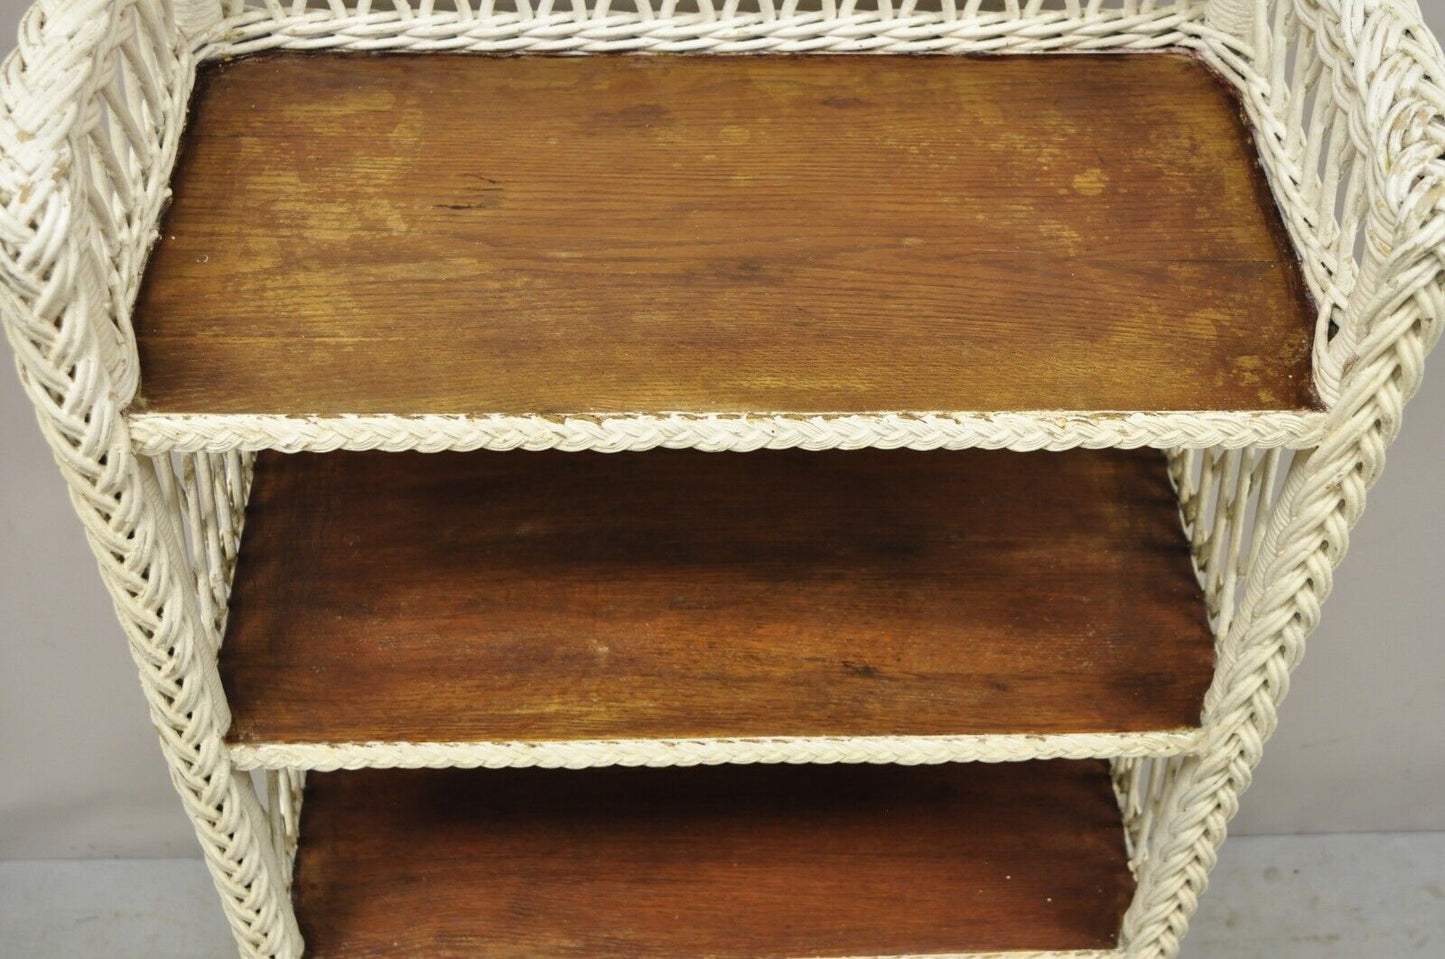 Antique American Victorian White Wicker 5 Shelf Bookcase Curio Display Stand